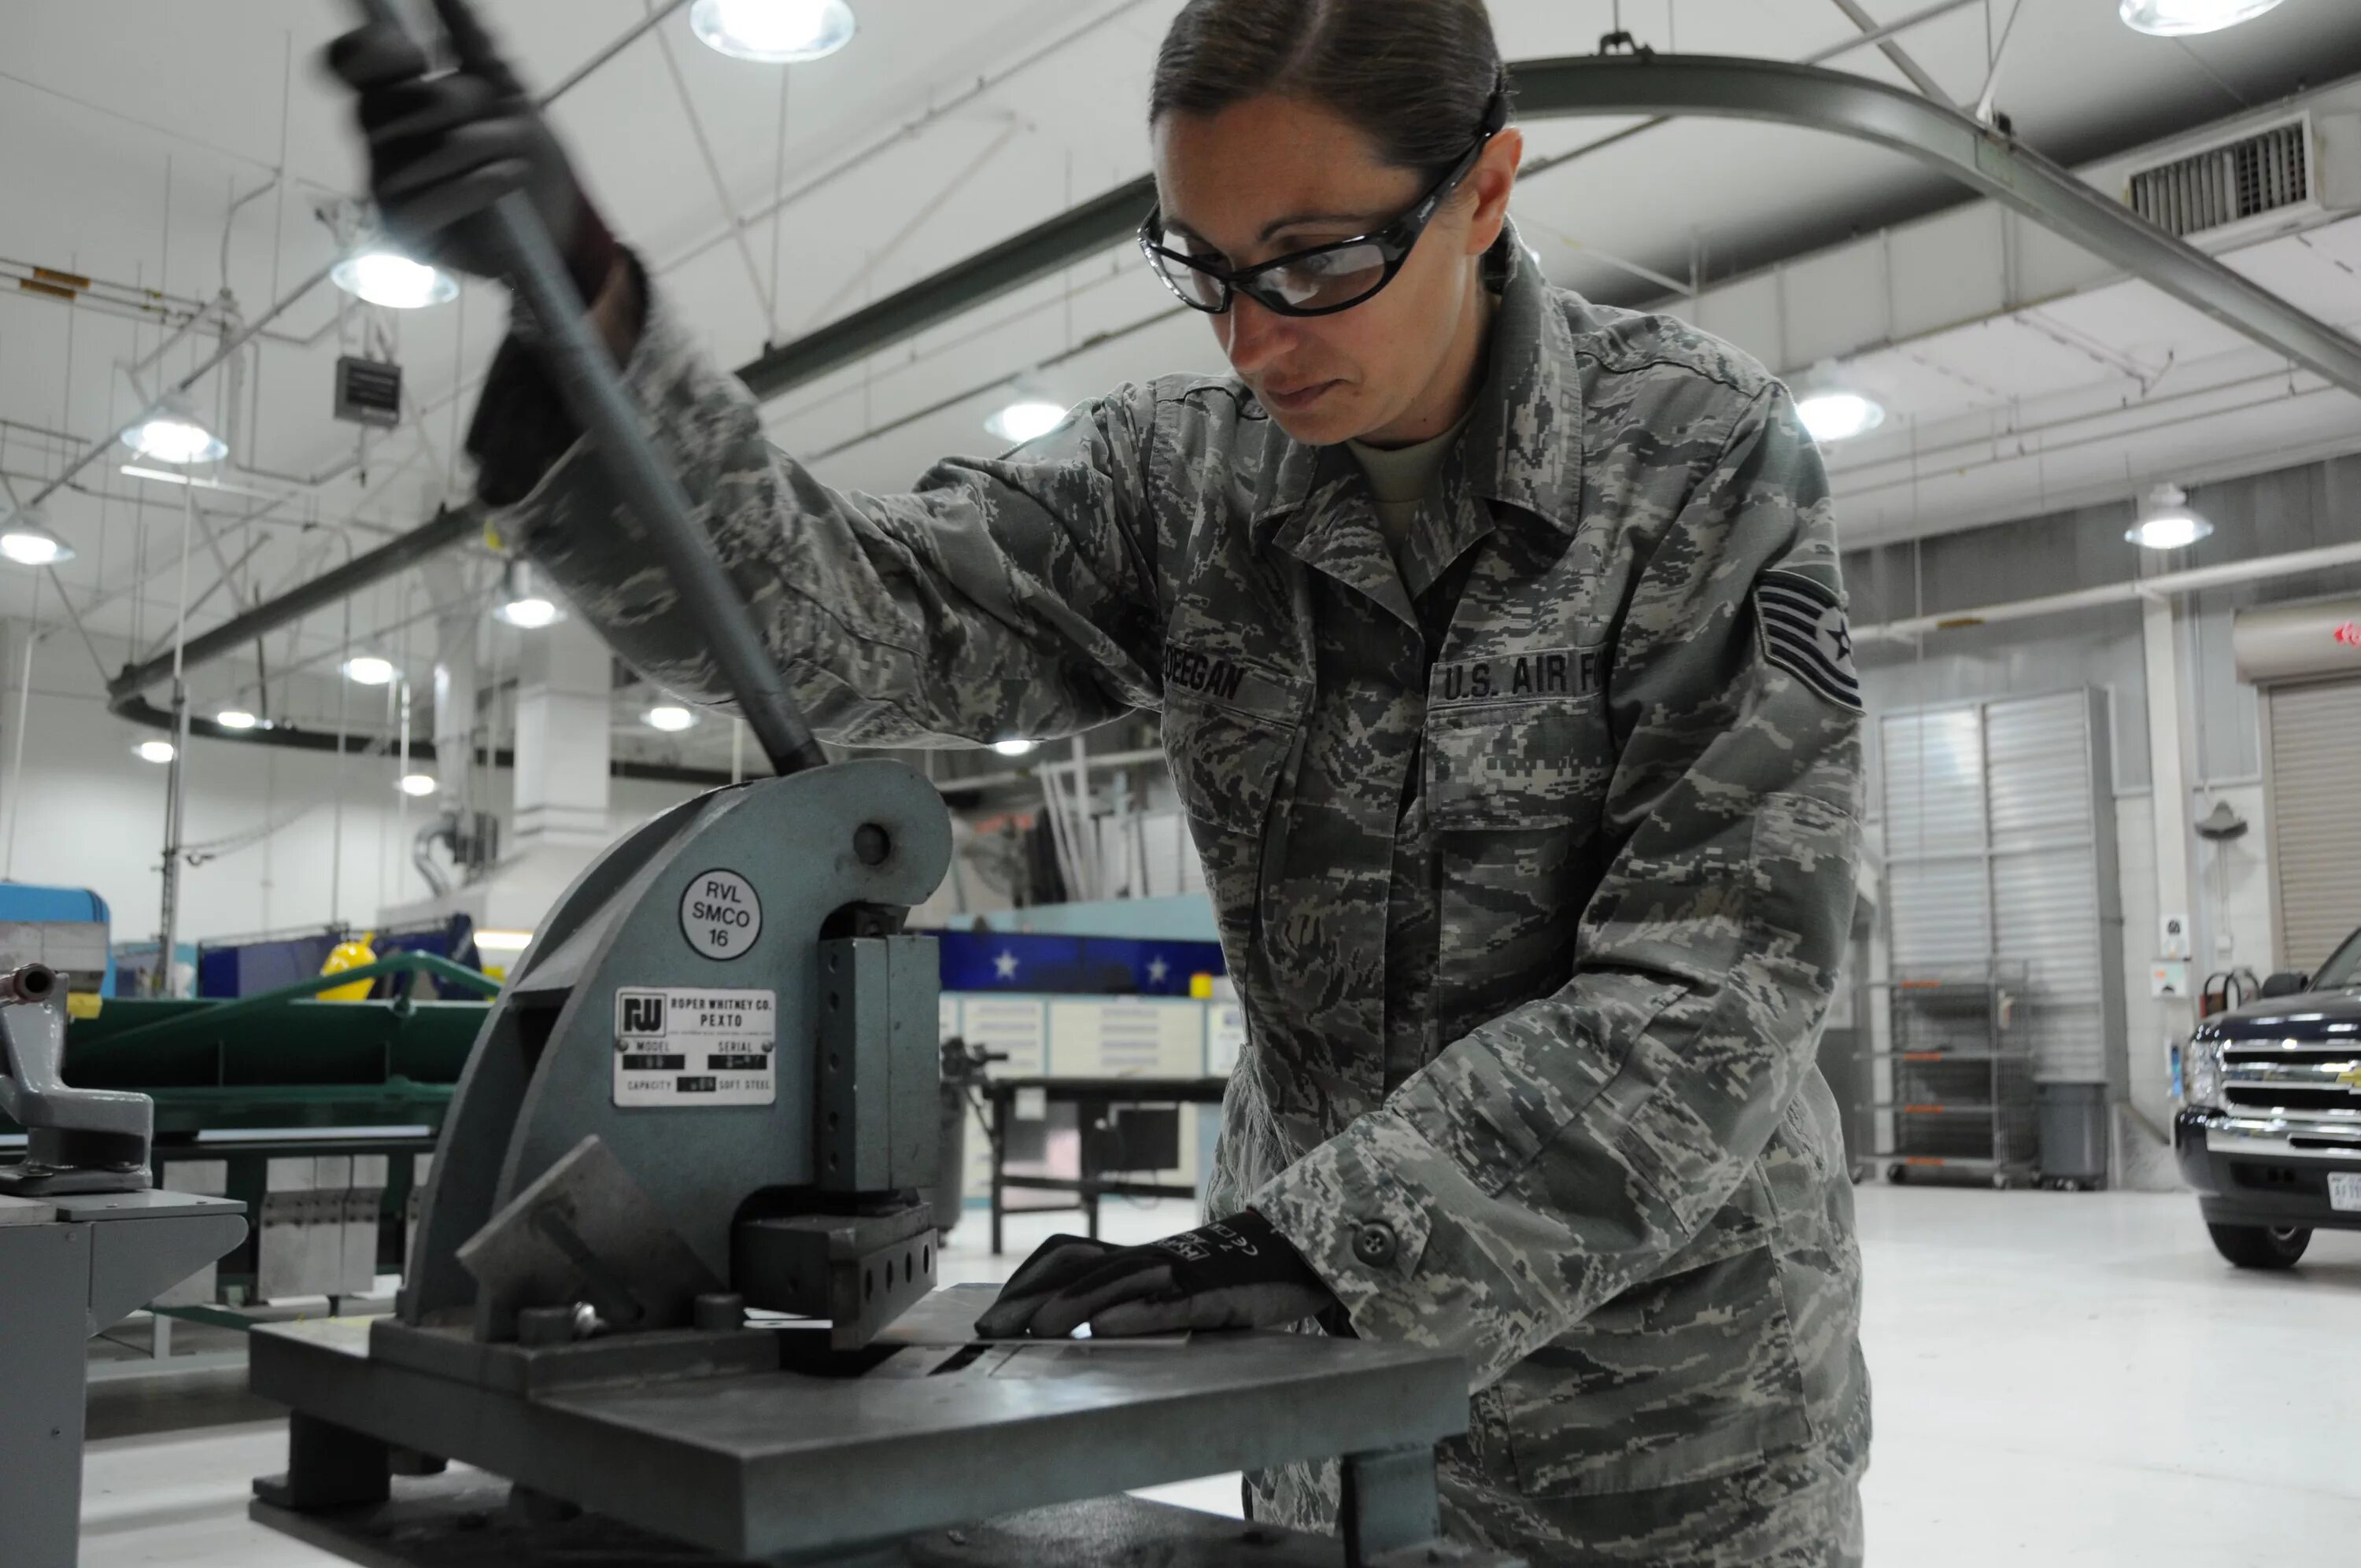 Metal tech. Производство боеприпасов. Arizona Air National Guard. Full guarding Sheet Metal. Военный механик - оптик картинки.